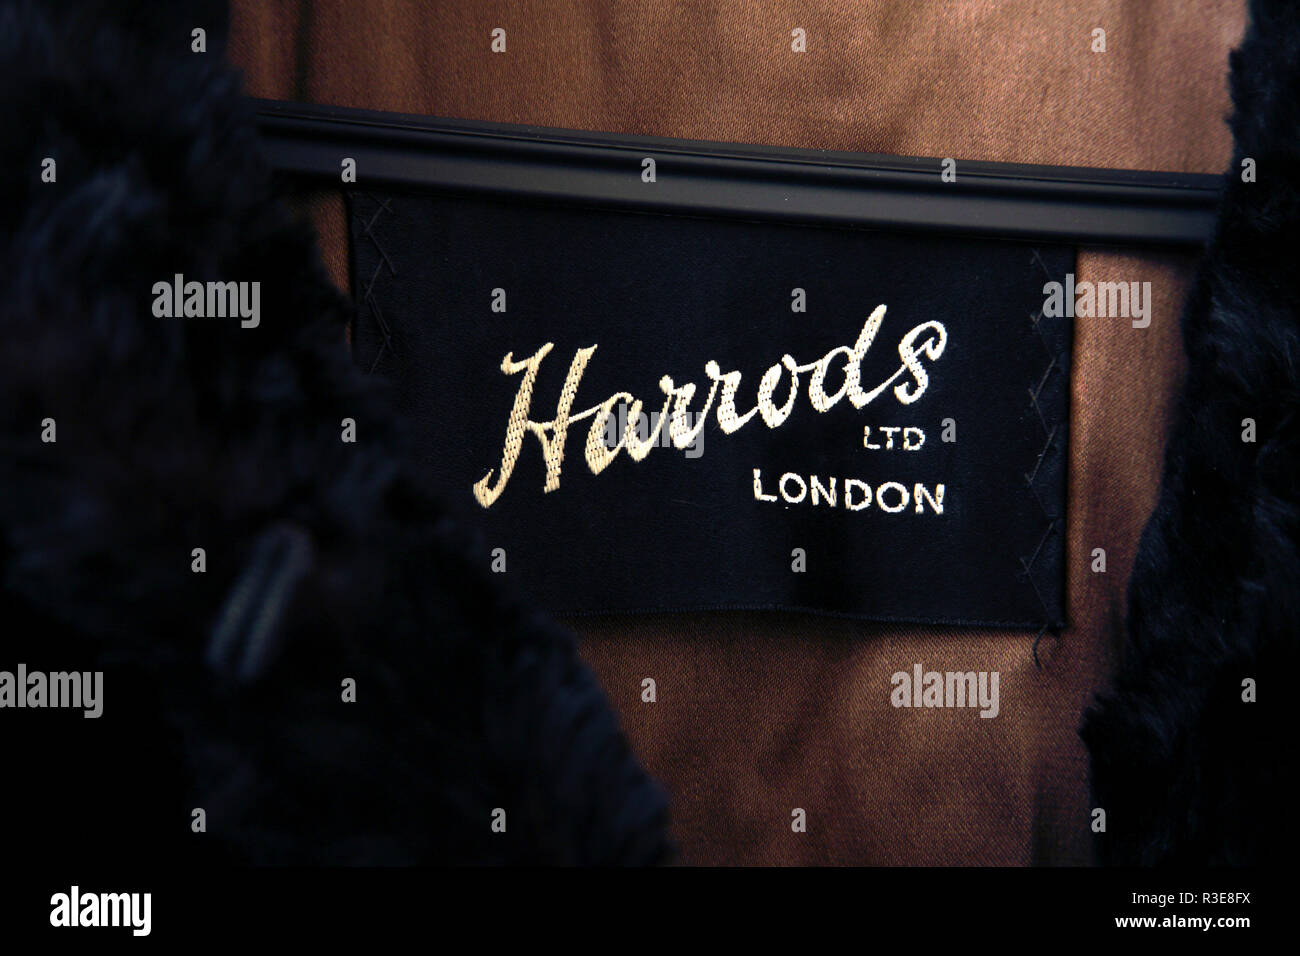 Vintage 1930's/40's Harrods Label on Black Mink Sable Fur Coat Stock Photo